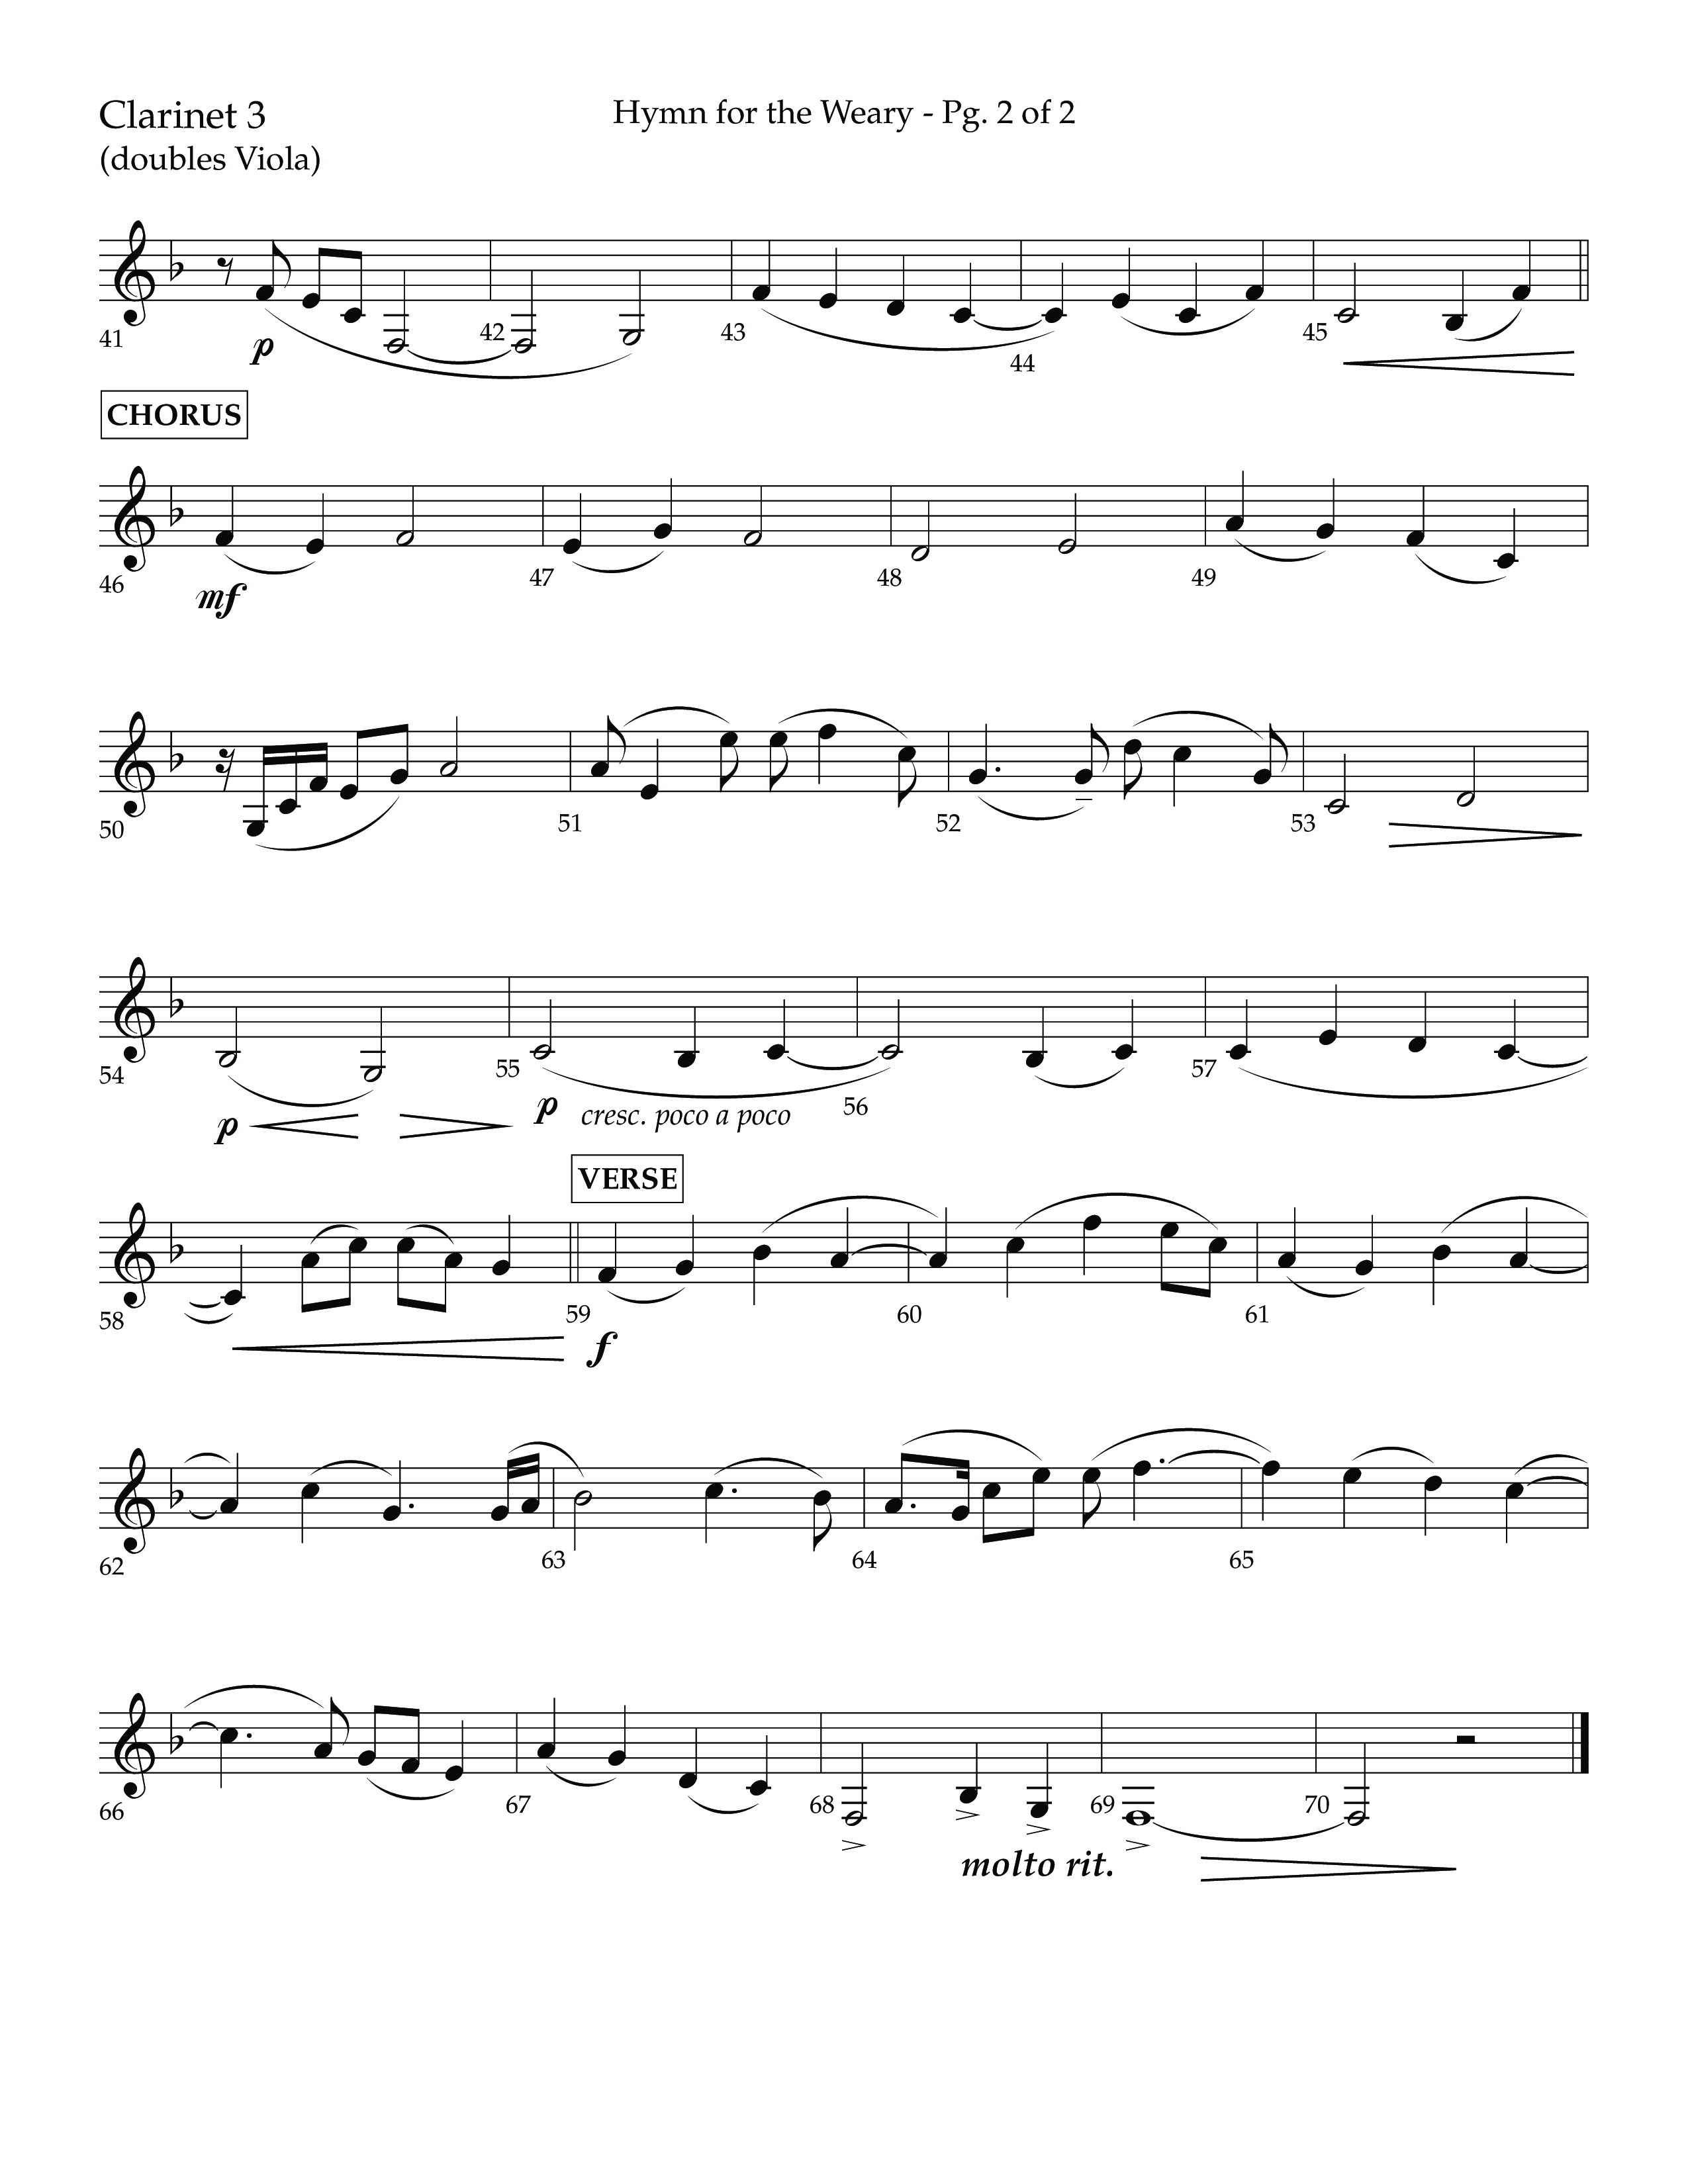 Hymn For The Weary (Choral Anthem SATB) Clarinet 3 (Lifeway Choral / Arr. Cody McVey)